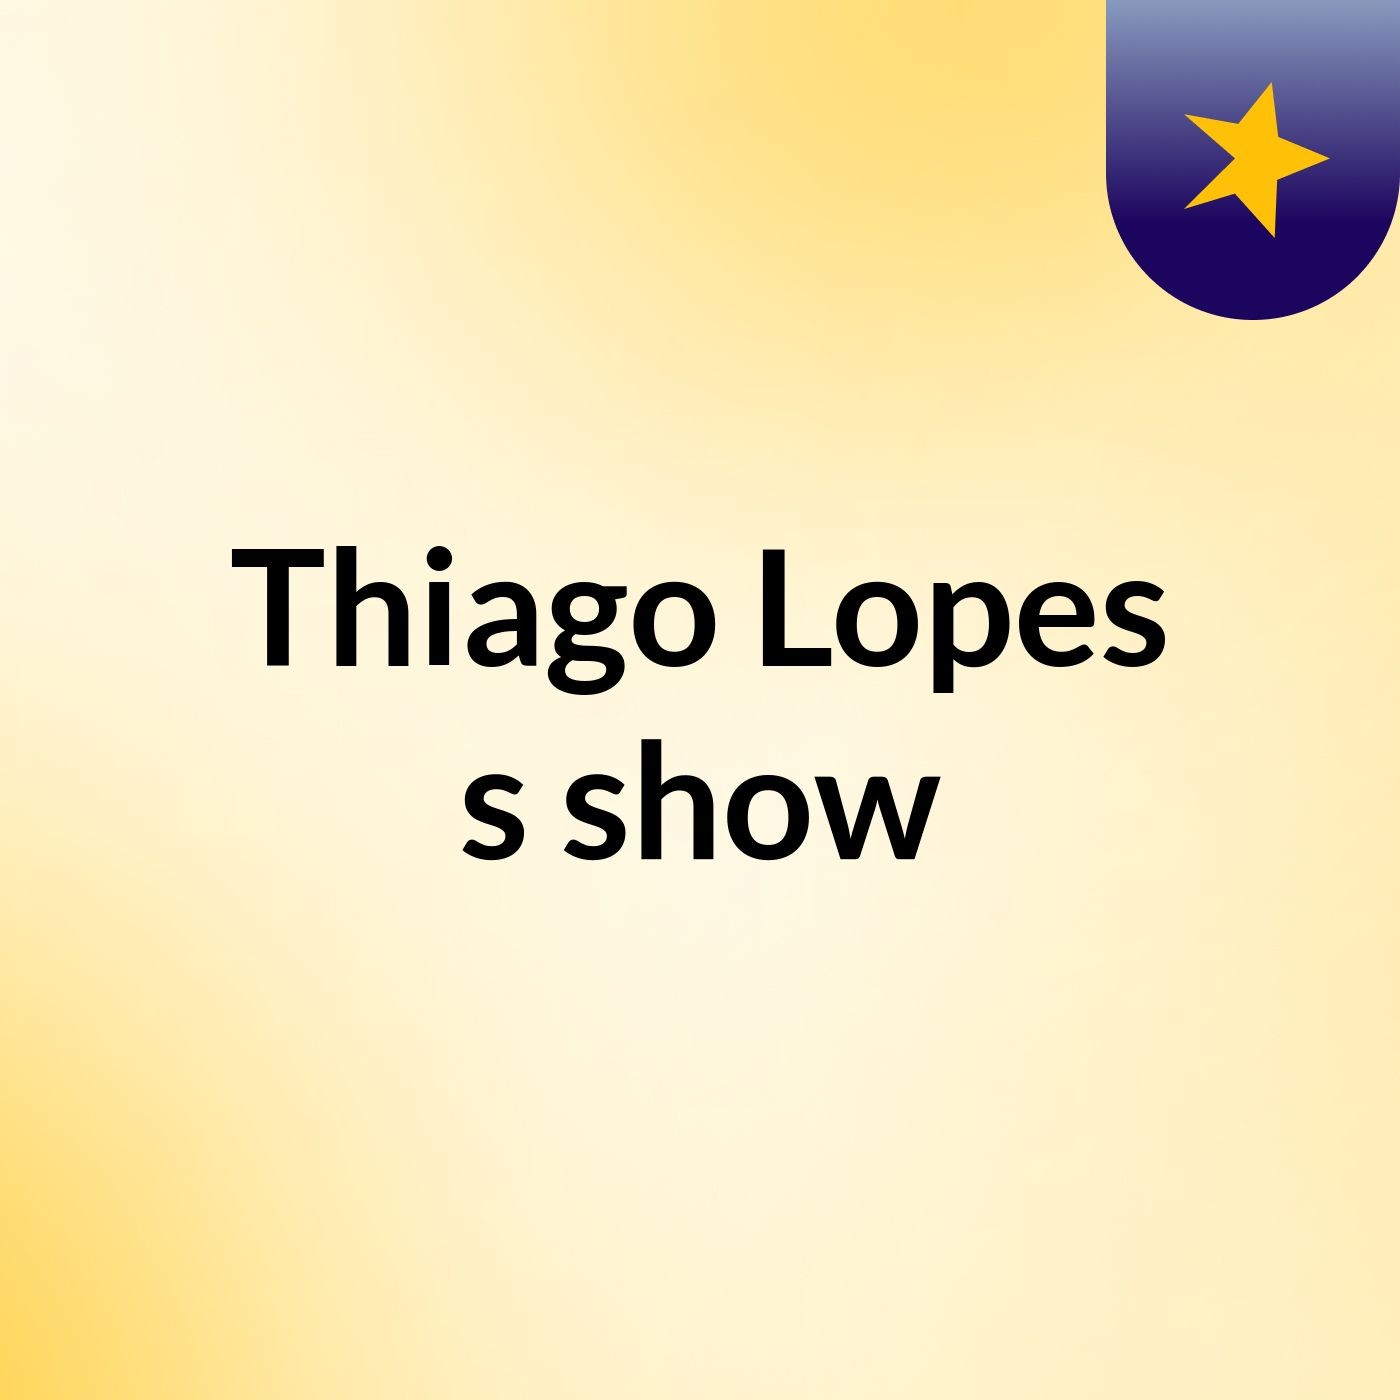 Thiago Lopes's show